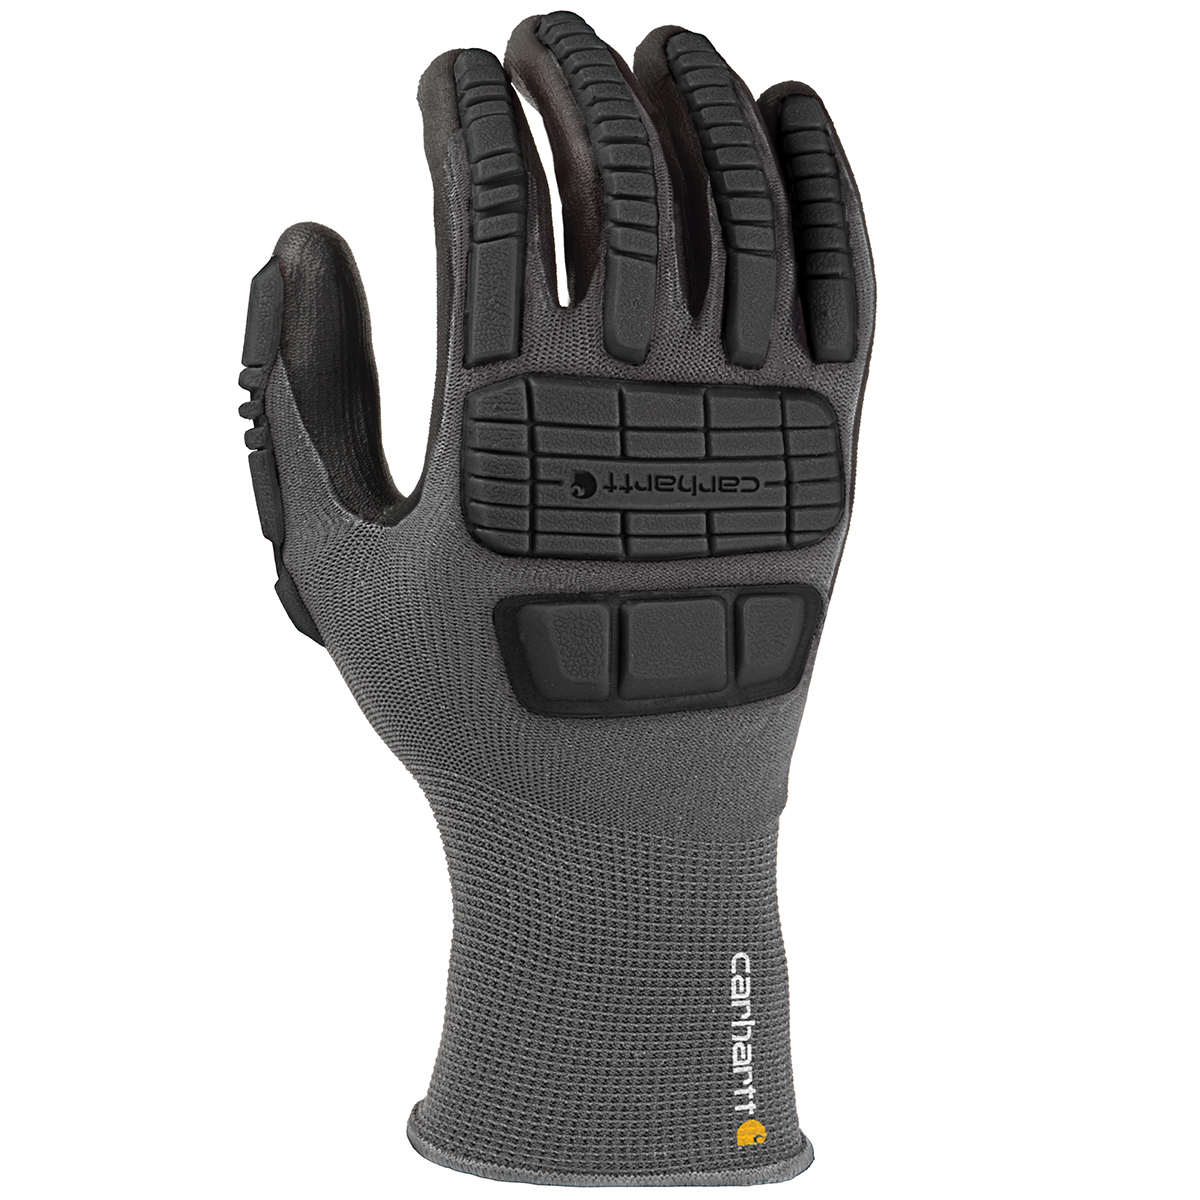 Carhartt Men's C-Grip Impact Hybrid Work Gloves